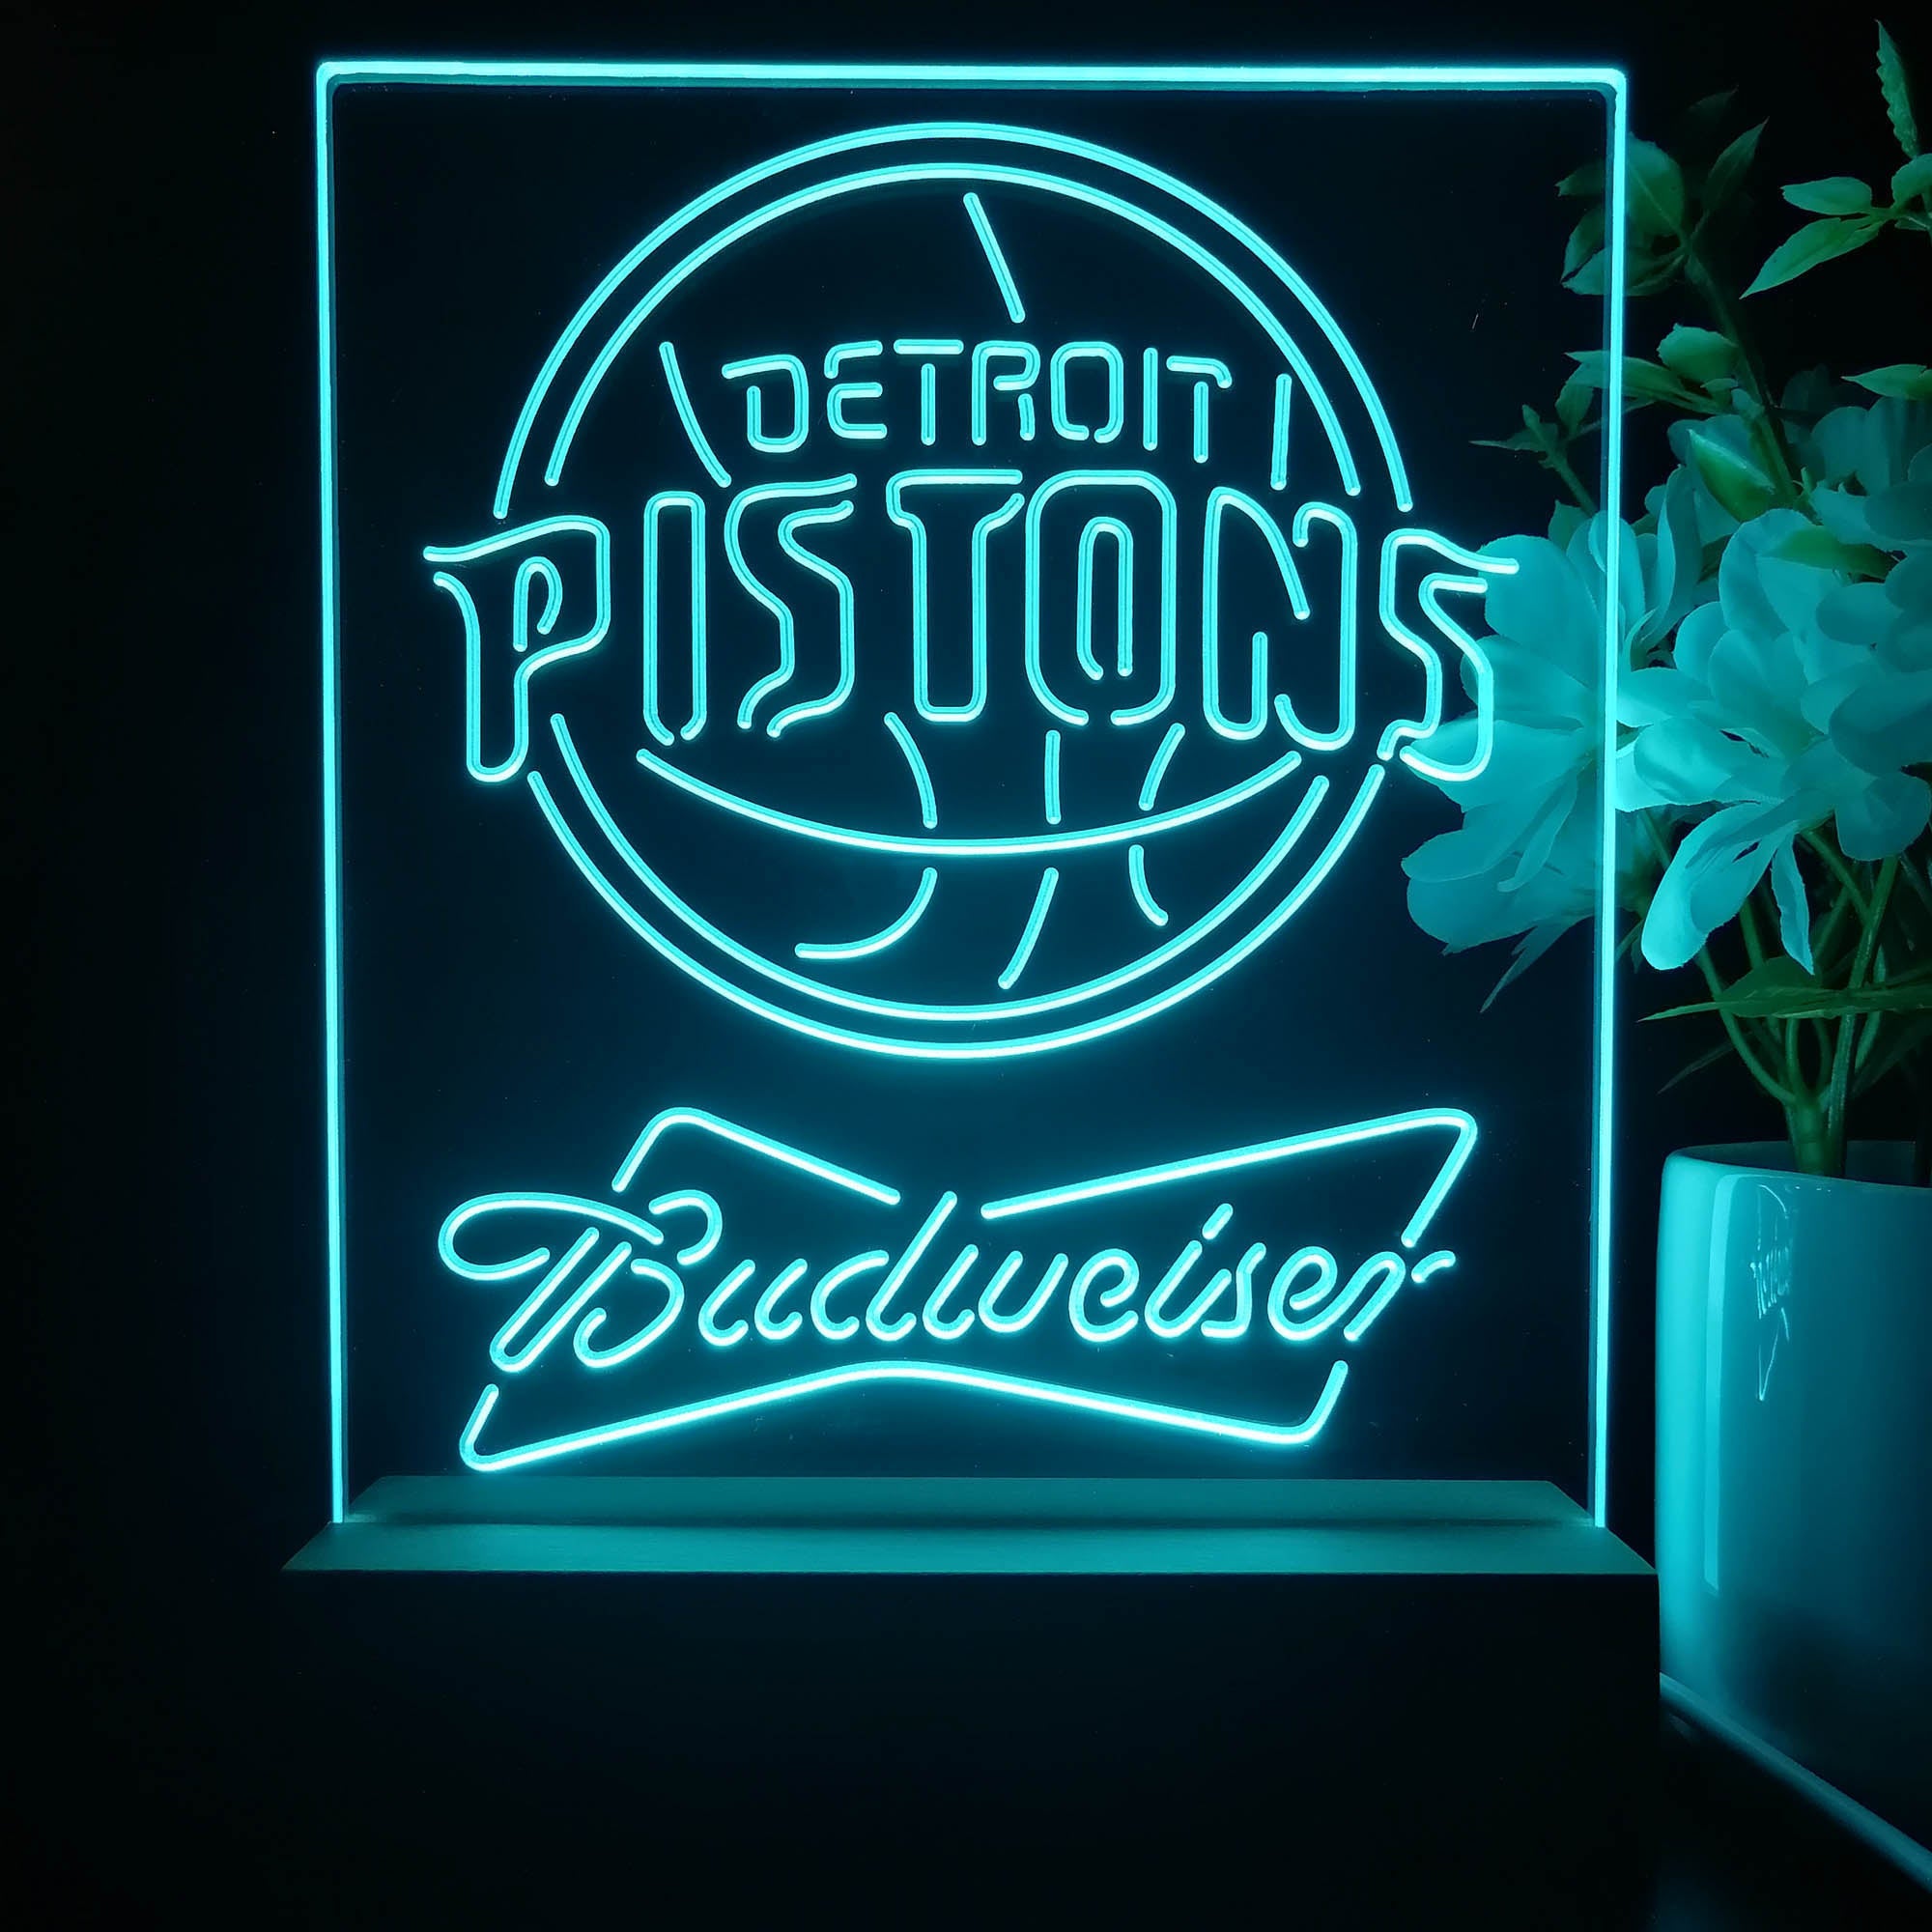 Detroit Pistons Budweiser Neon Sign Pub Bar Lamp